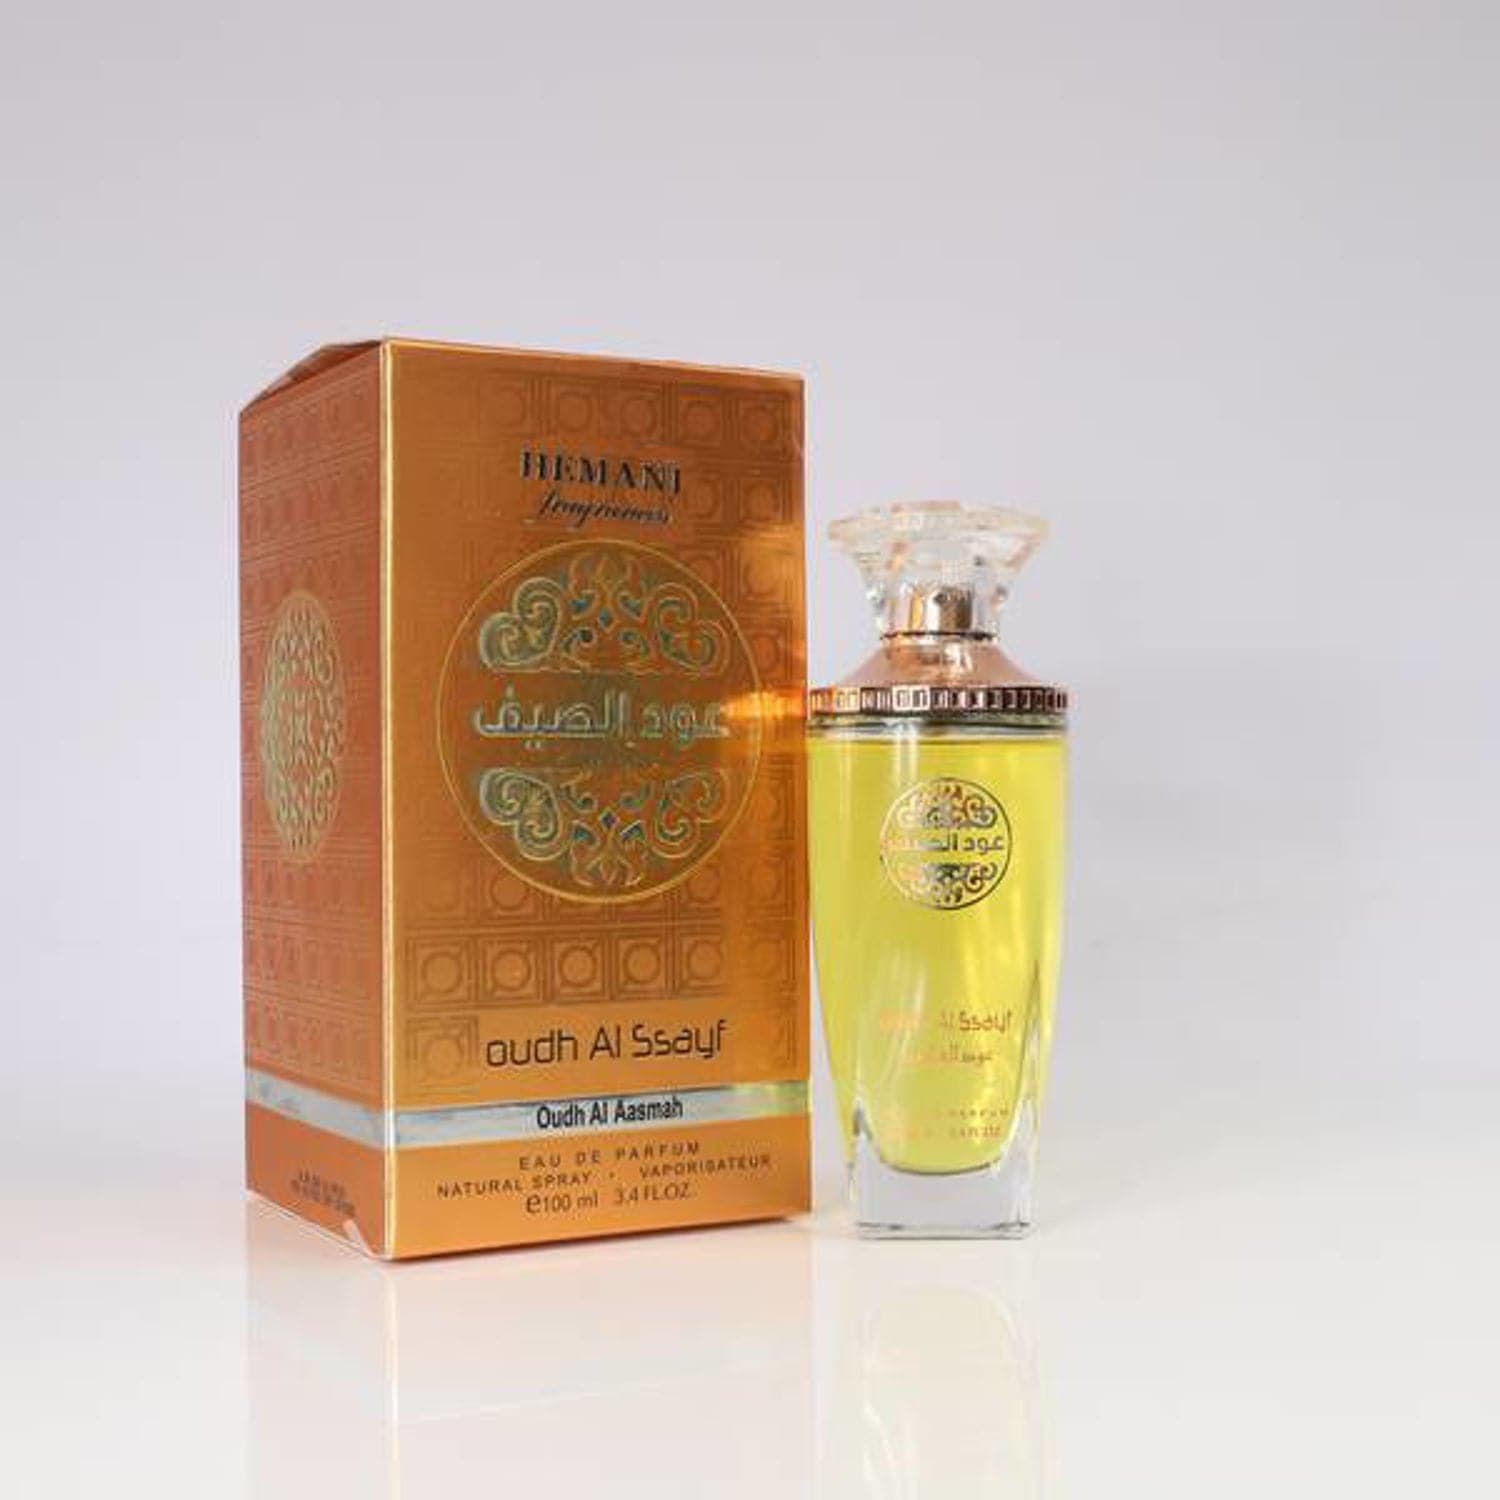 Hemani Oudh Al Ssayf Perfume 100Ml - Premium  from Hemani - Just Rs 900.00! Shop now at Cozmetica